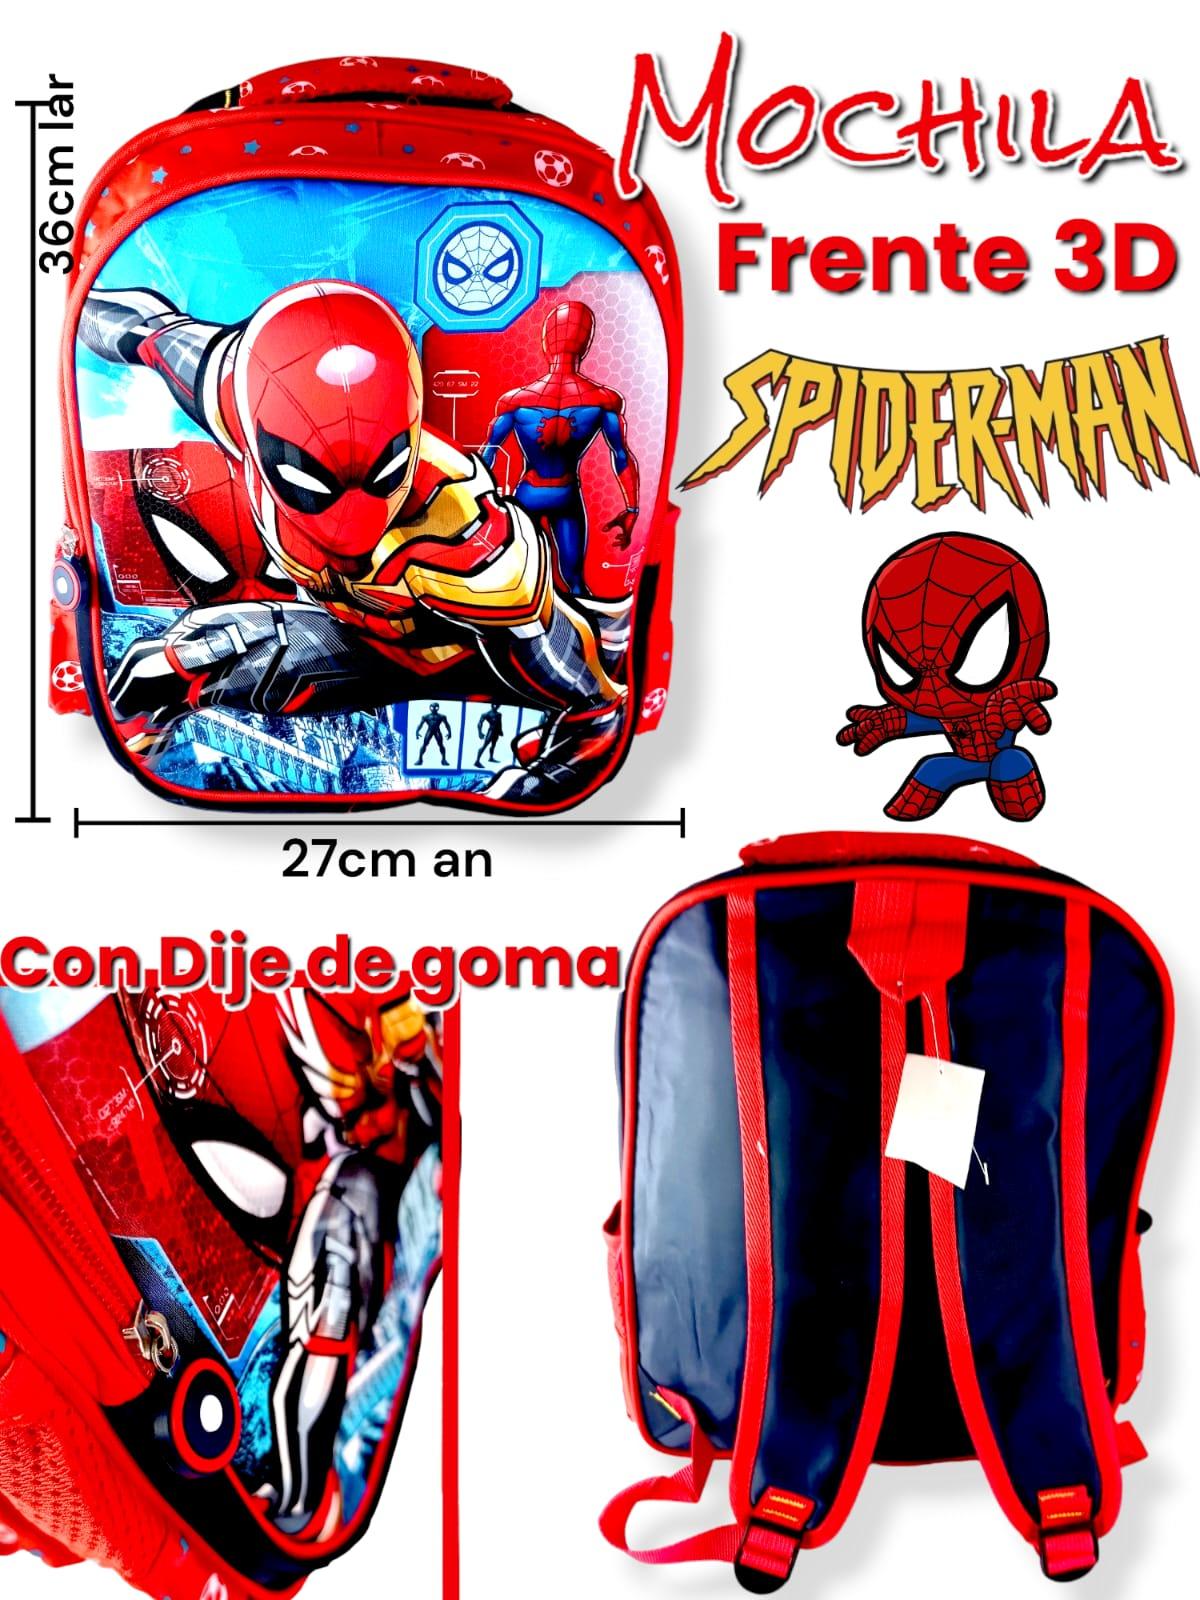 Mochila Frente 3D SPIDERMAN